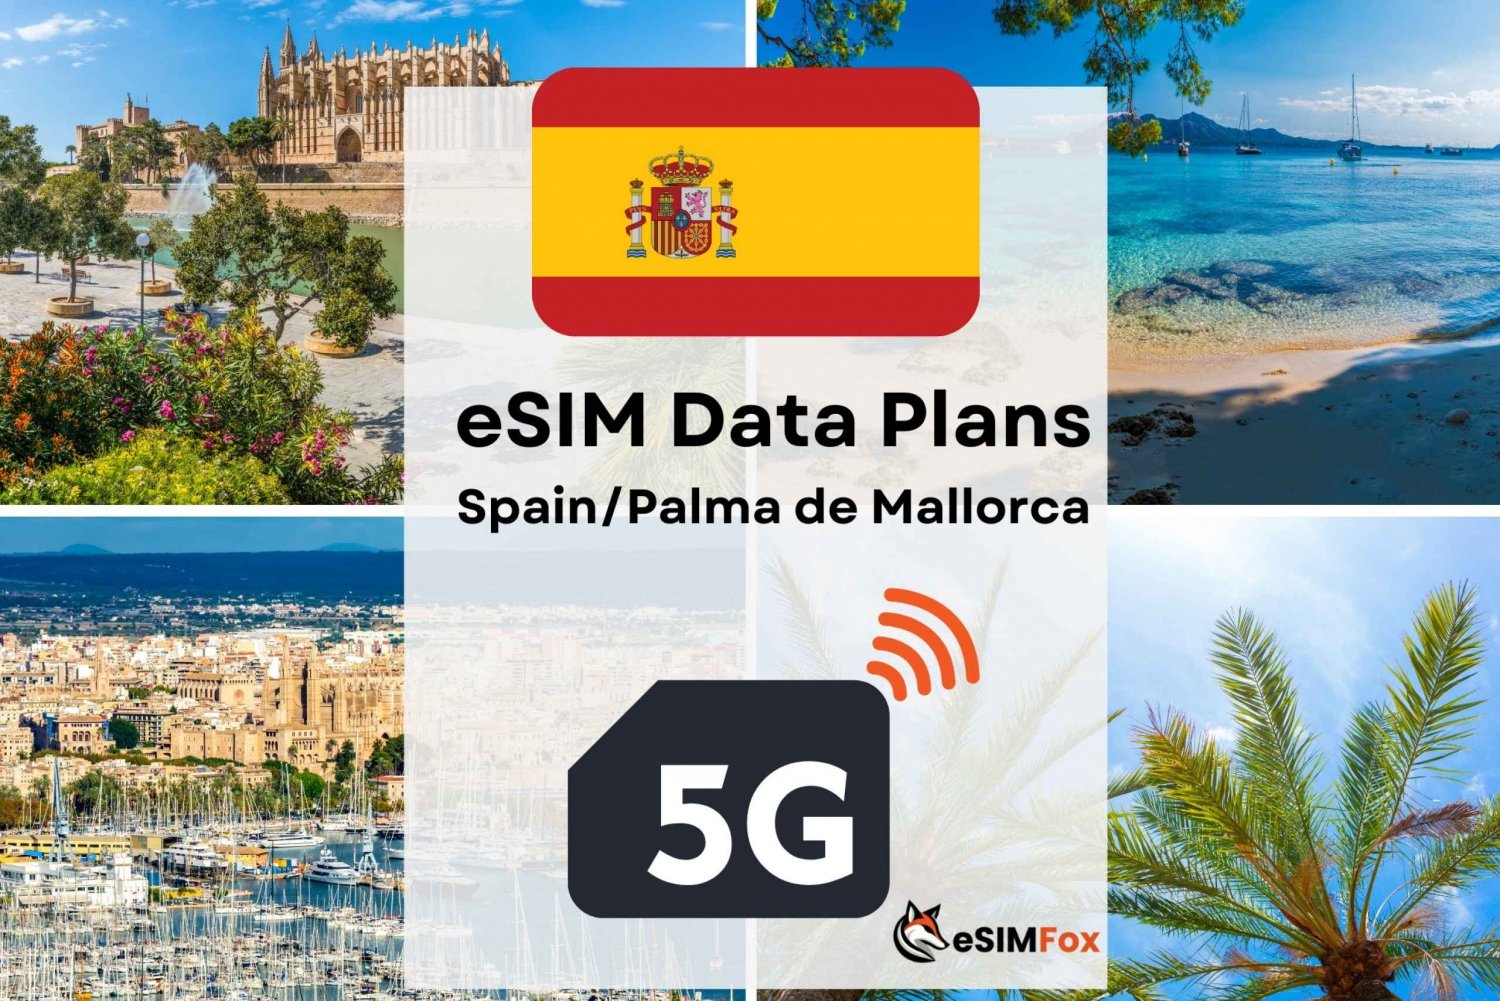 Palma de Mallorca: Internetowy plan danych eSIM dla Hiszpanii 4G/5G